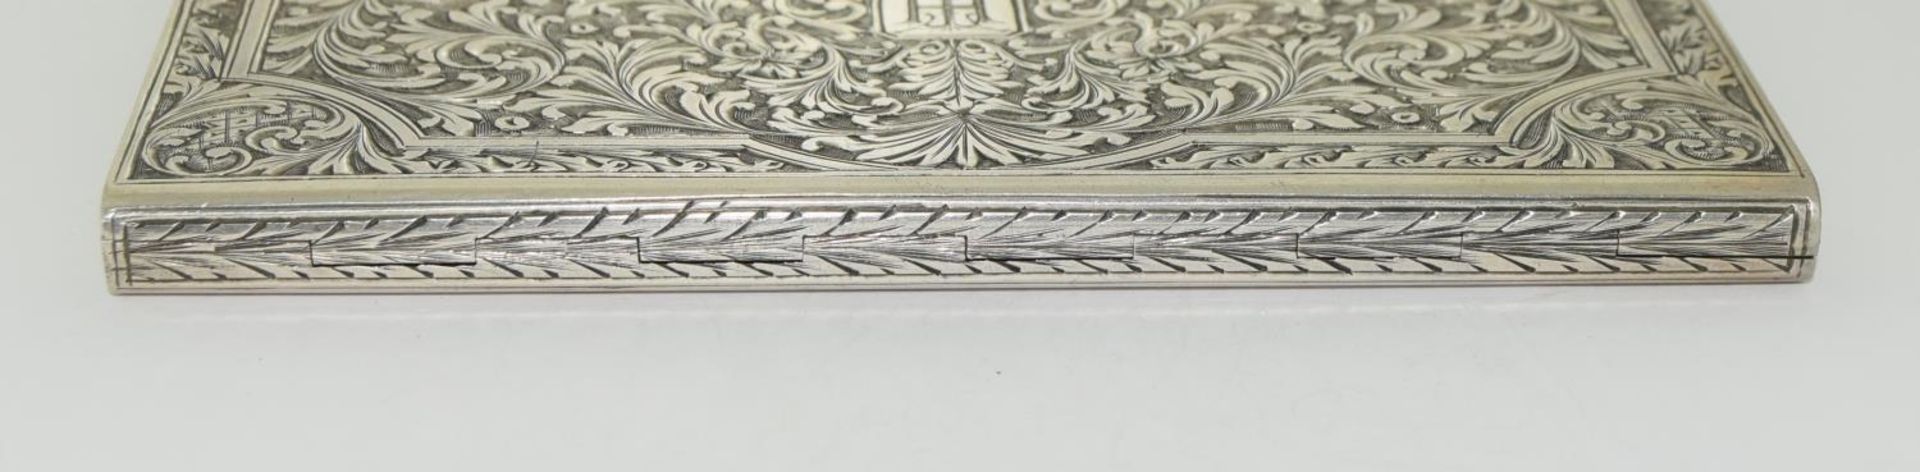 Silver cigarette case - 195g. Excellent condition. - Image 6 of 8